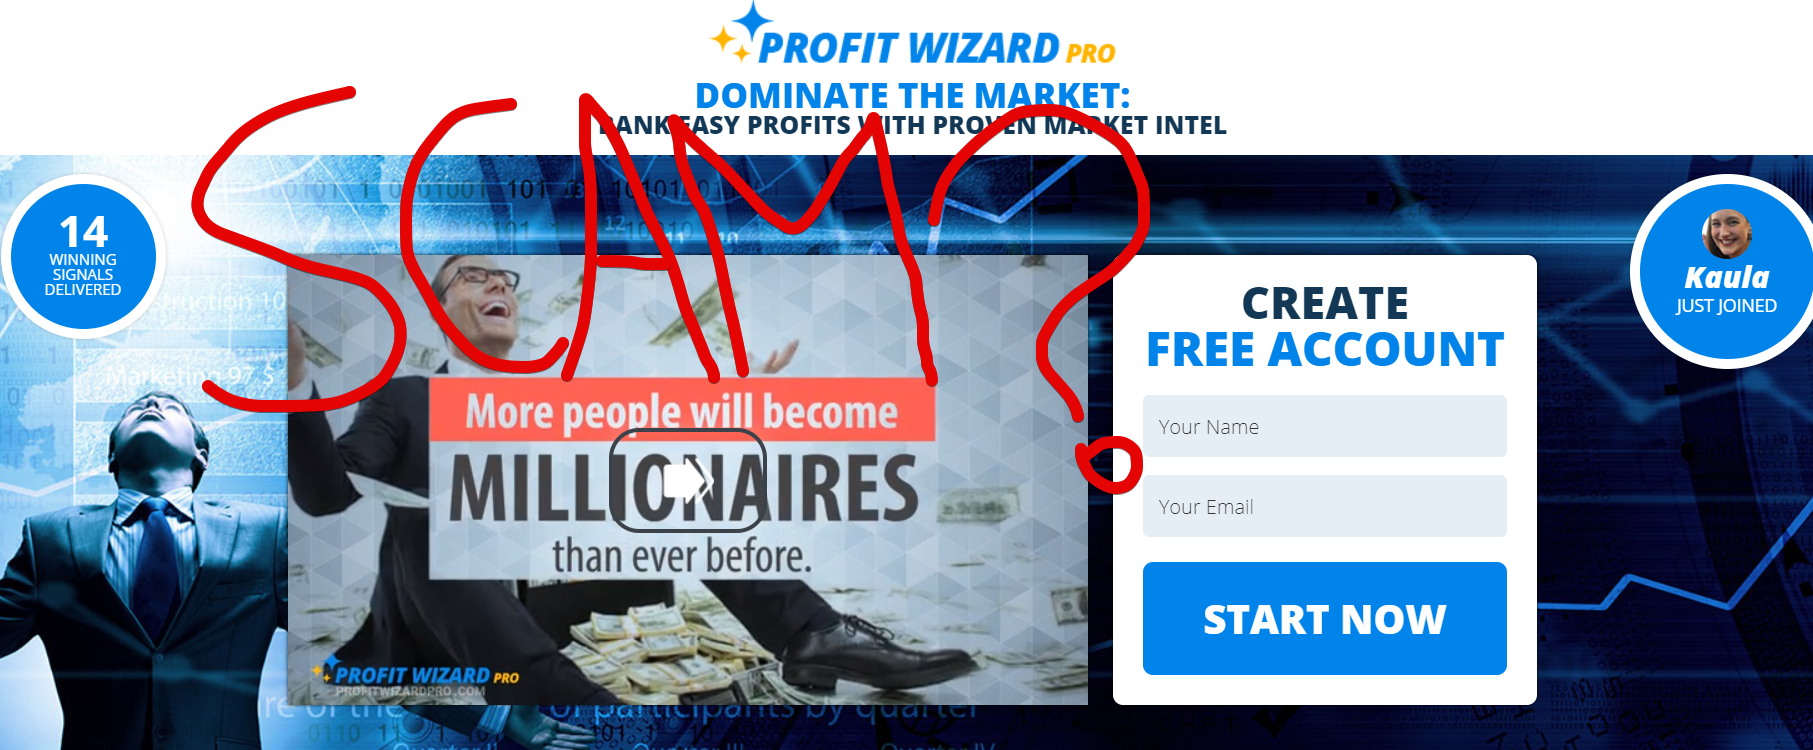 Profit Wizard Pro scam